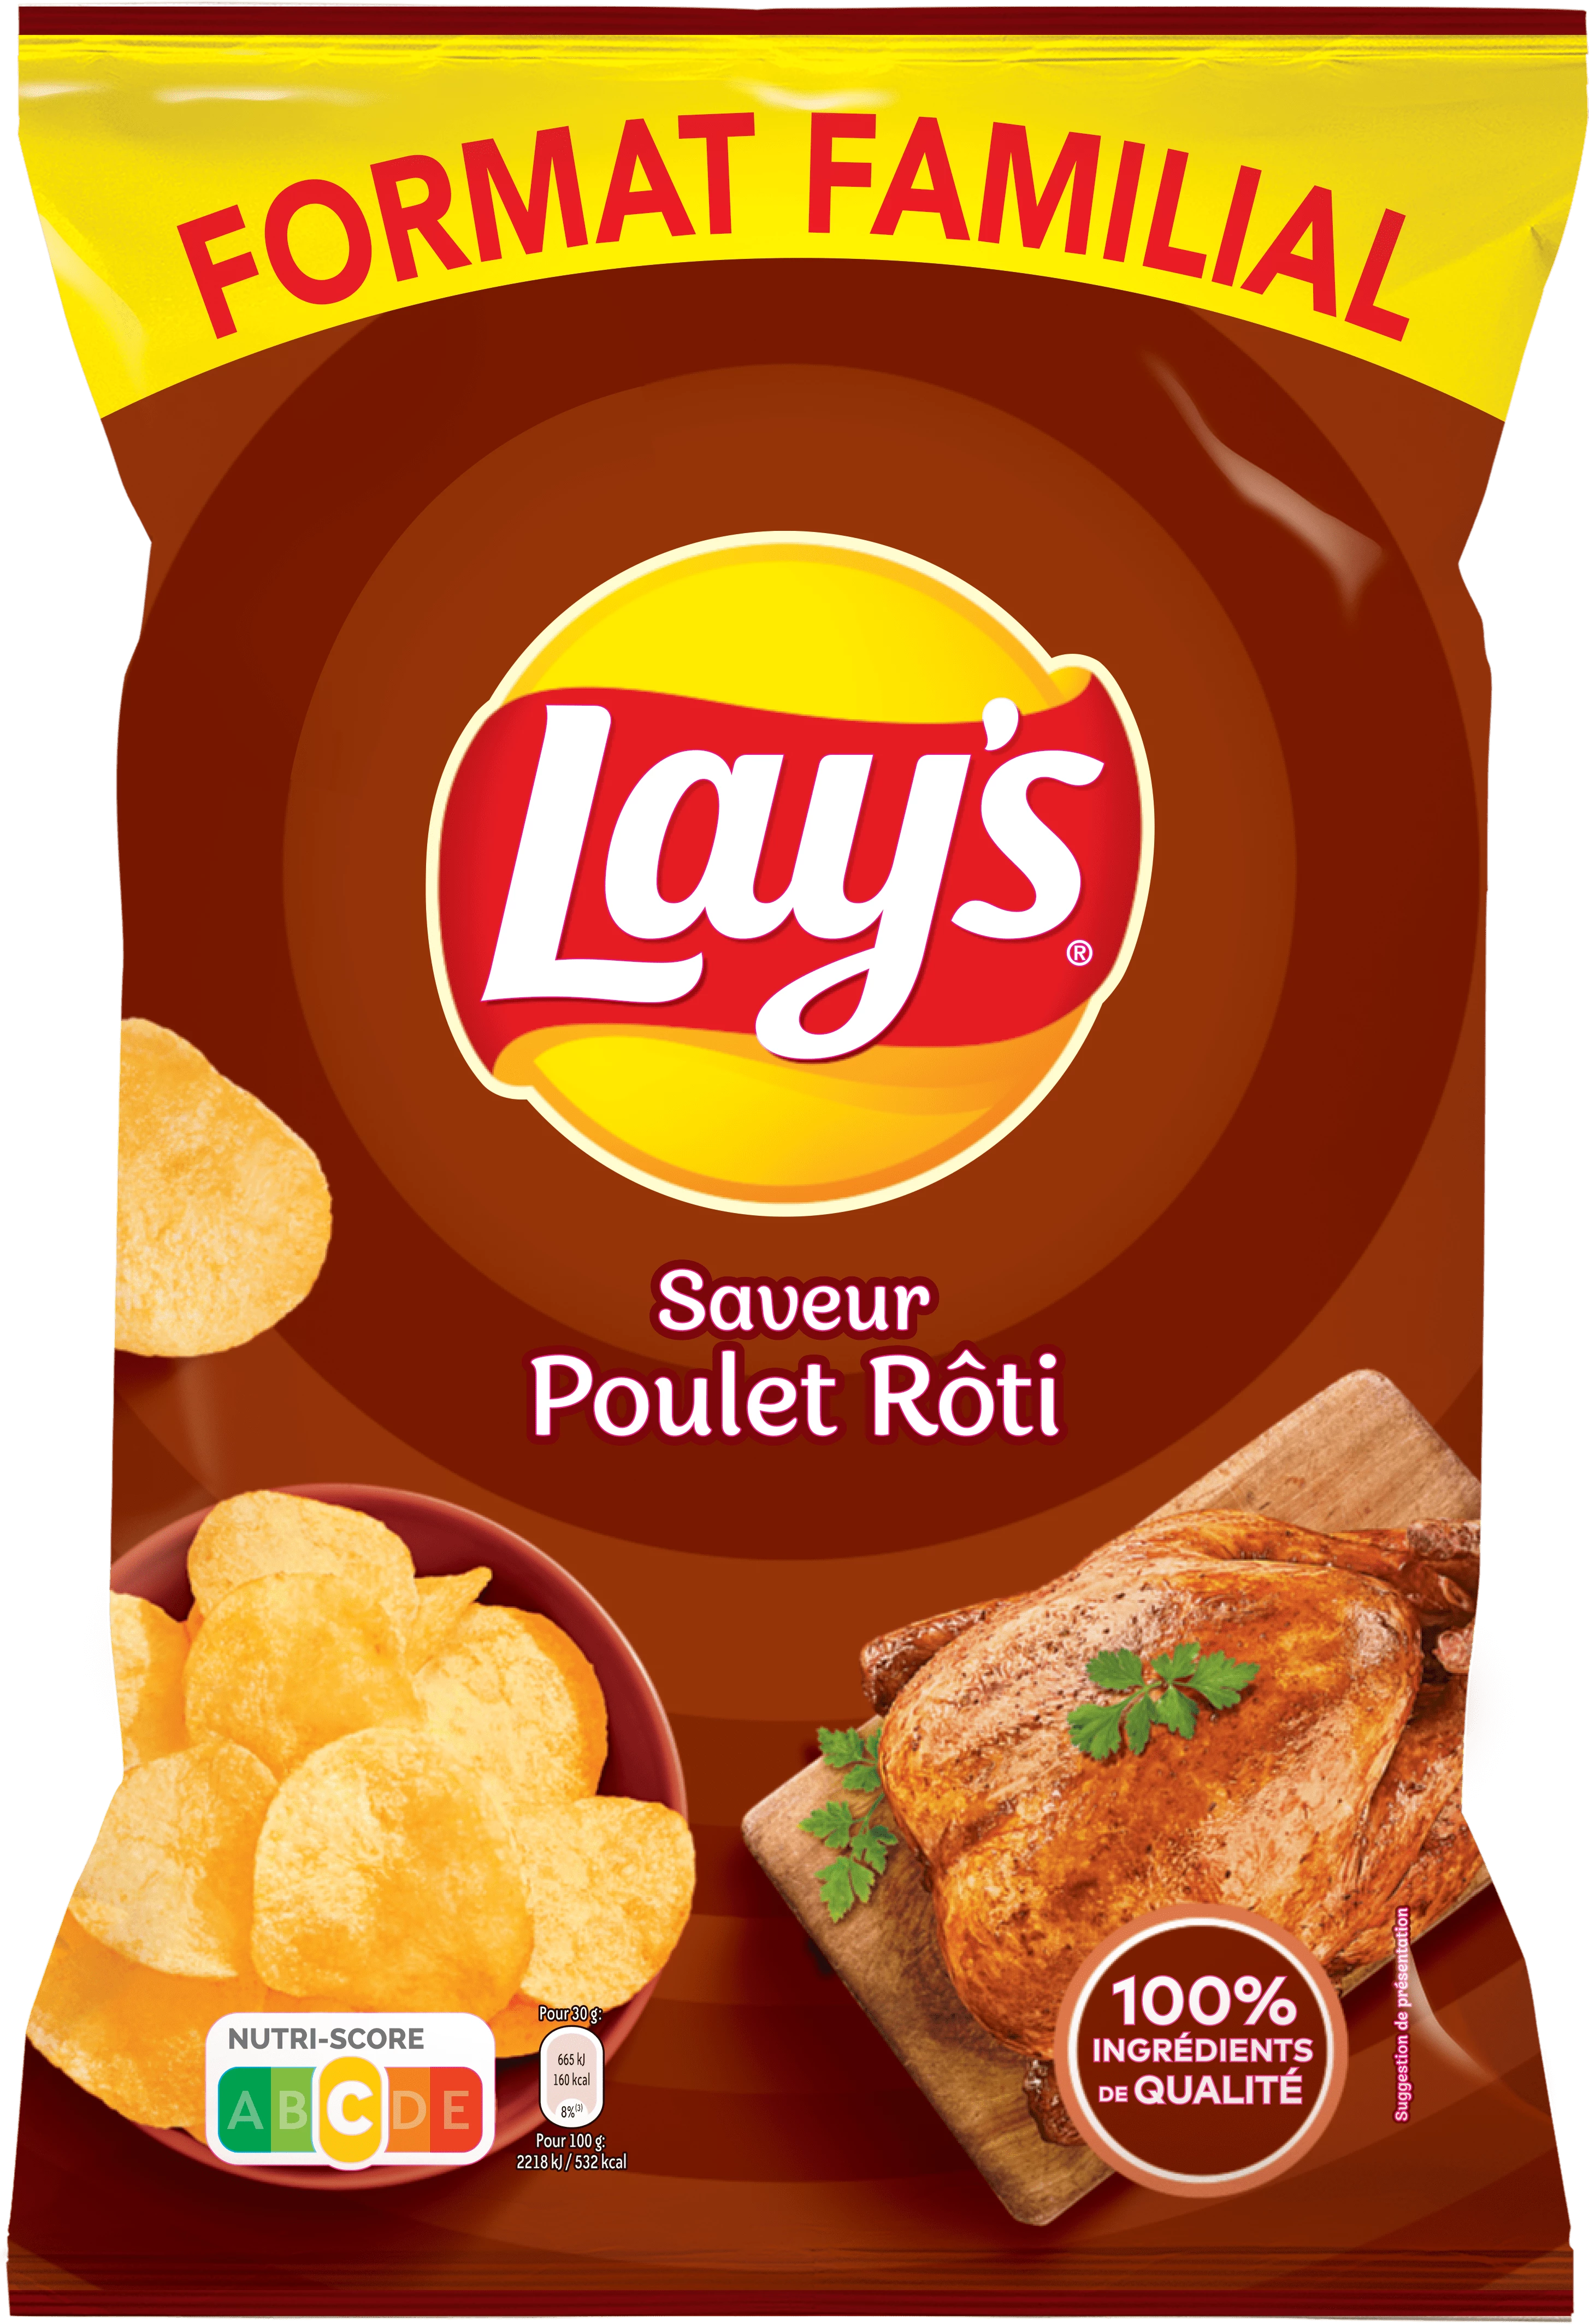 Roasted Chicken Crisps, 250g -LAY'S